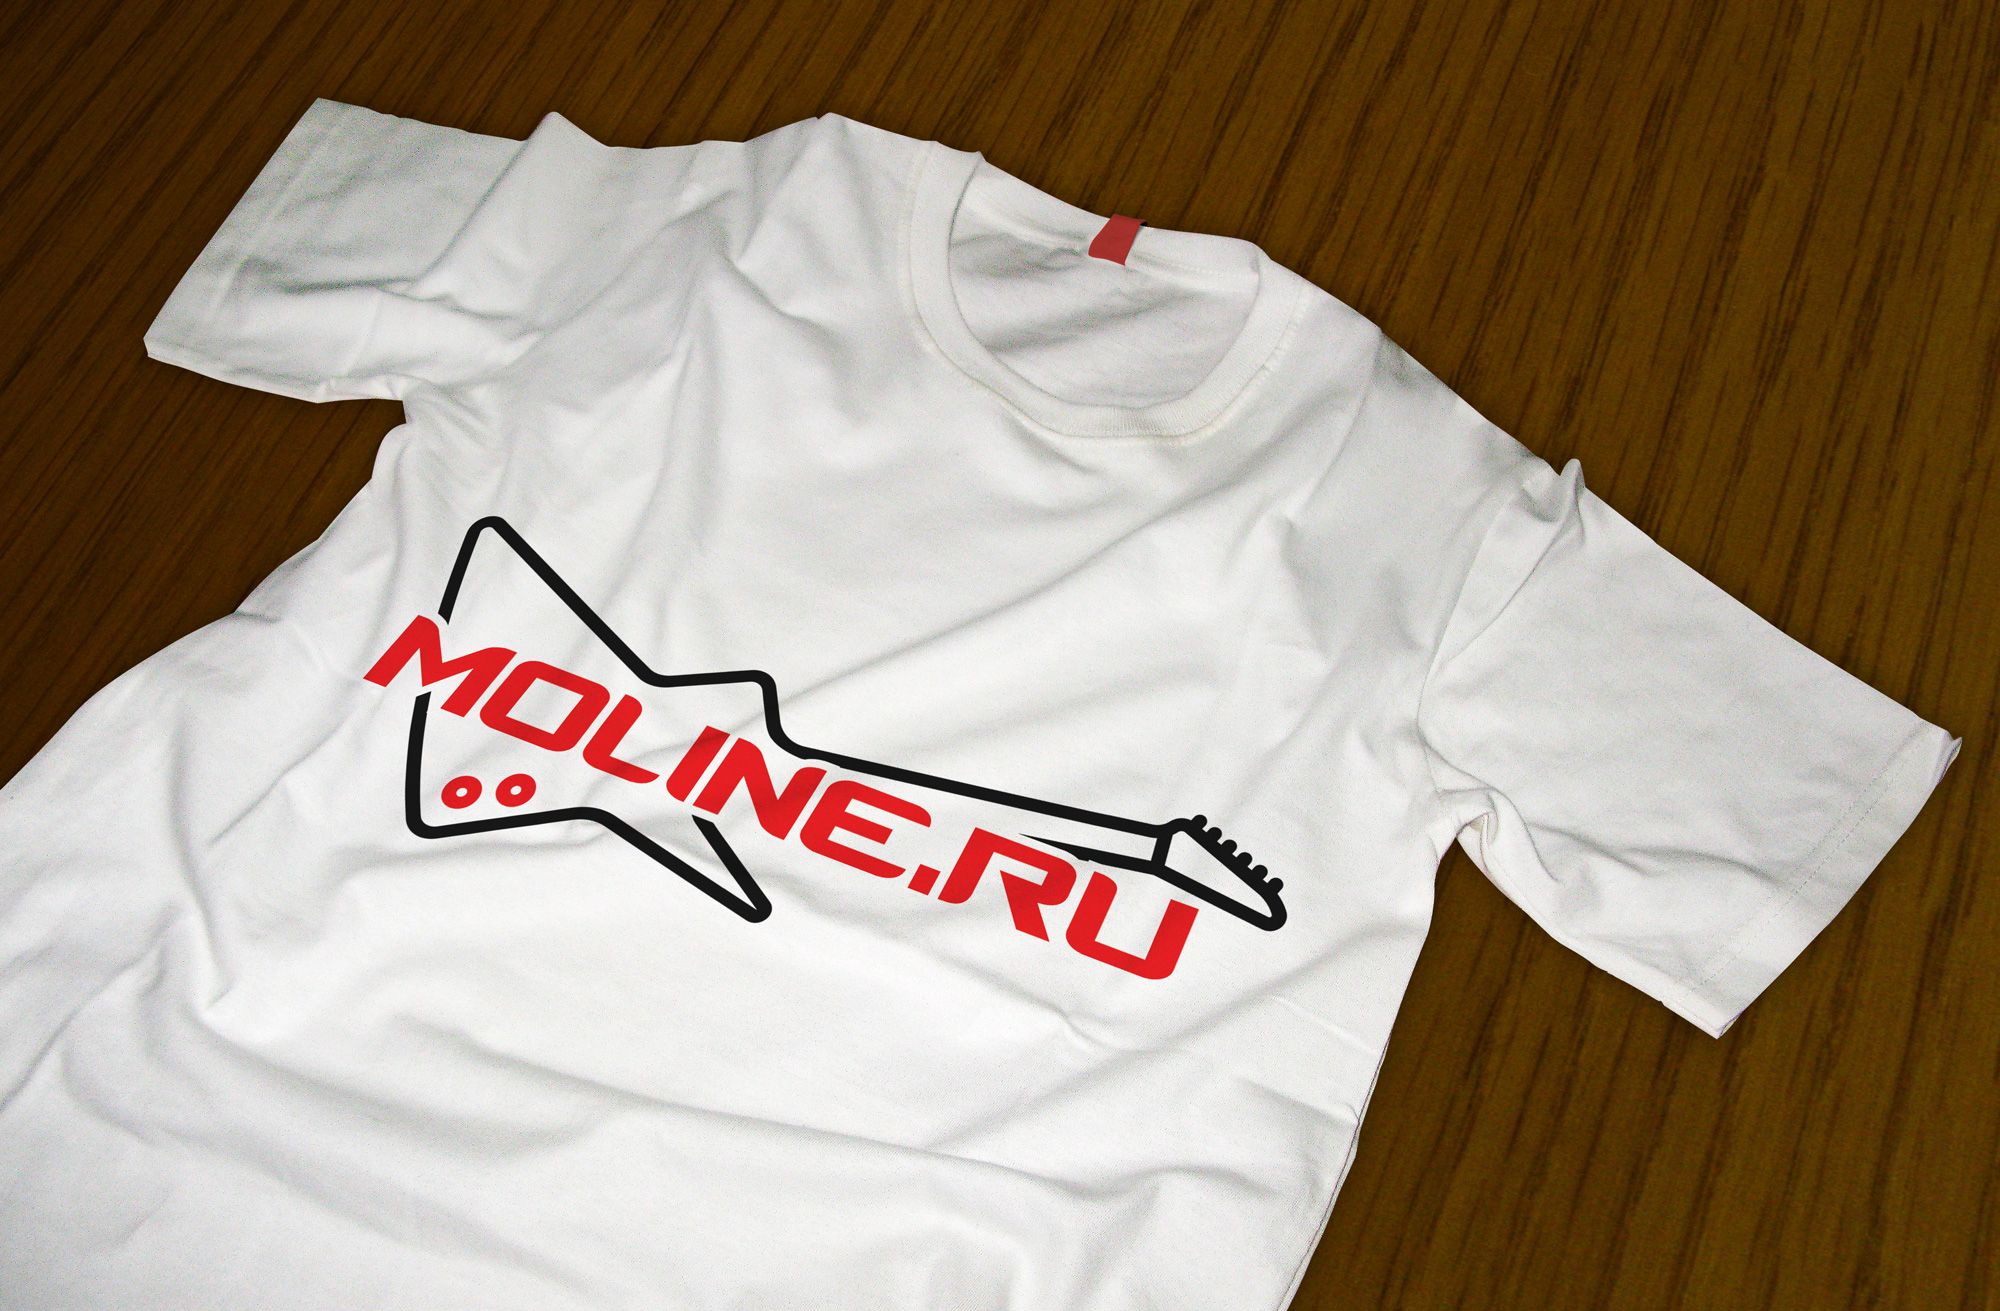 Логотип для MOLINE.RU - дизайнер GreenRed